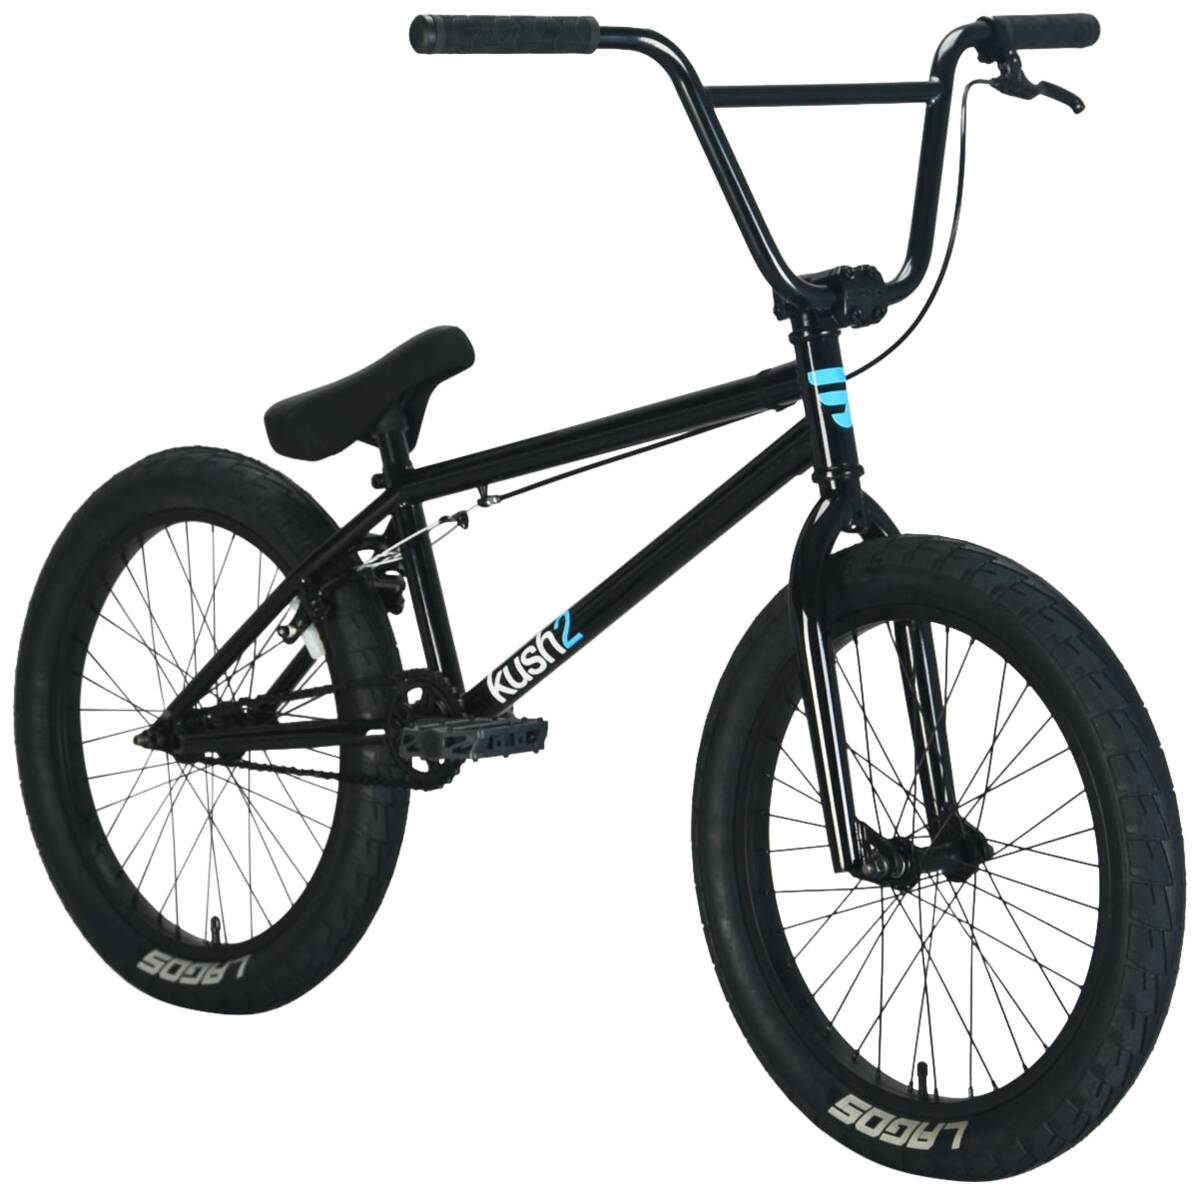 Mafia Kush 2 S2 20" BMX Freestyle Bike - Black